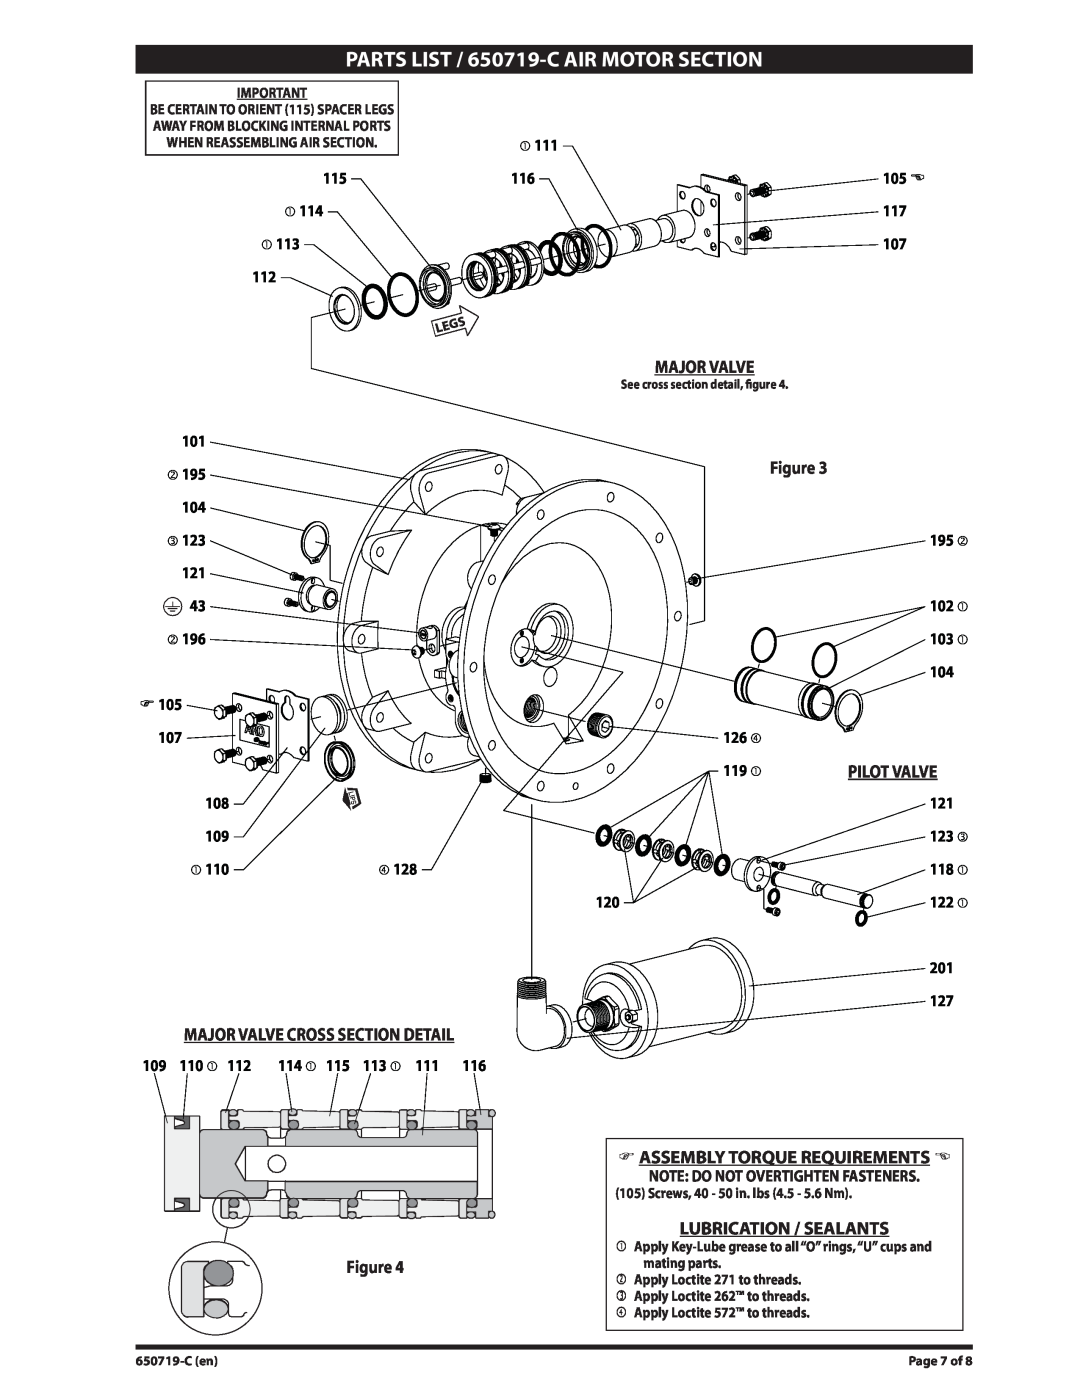 Ingersoll-Rand 650719-C Pilot Valve, Major Valve Cross Section Detail, Assembly Torque Requirements, 115, 117, 105 